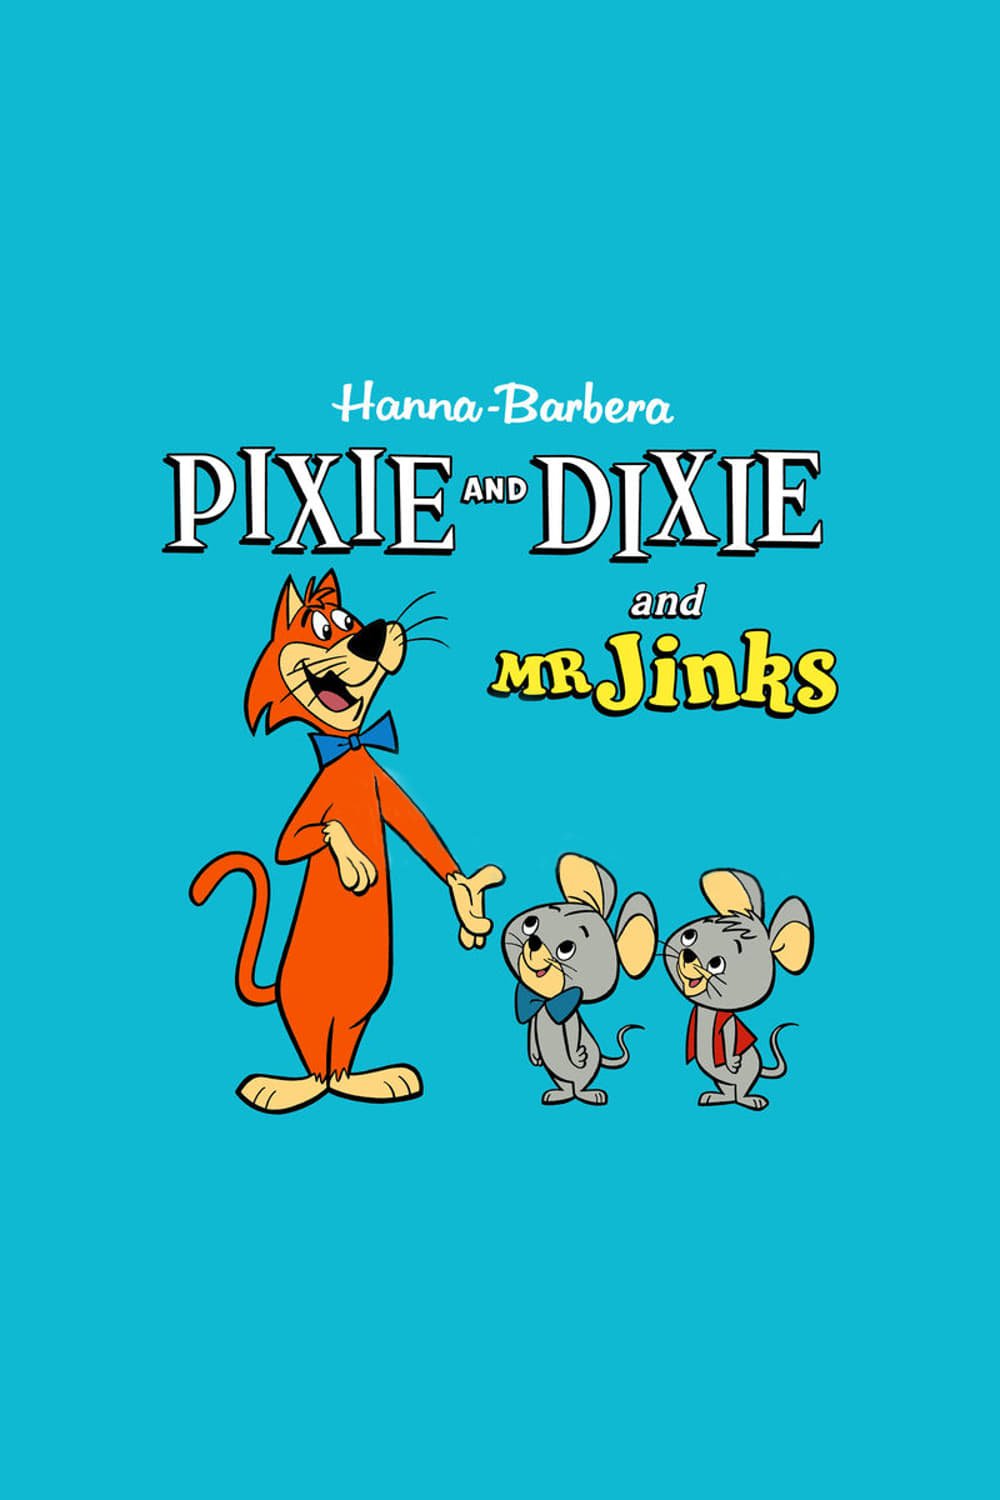 Pixie, Dixie y el gato Jinks (1958)